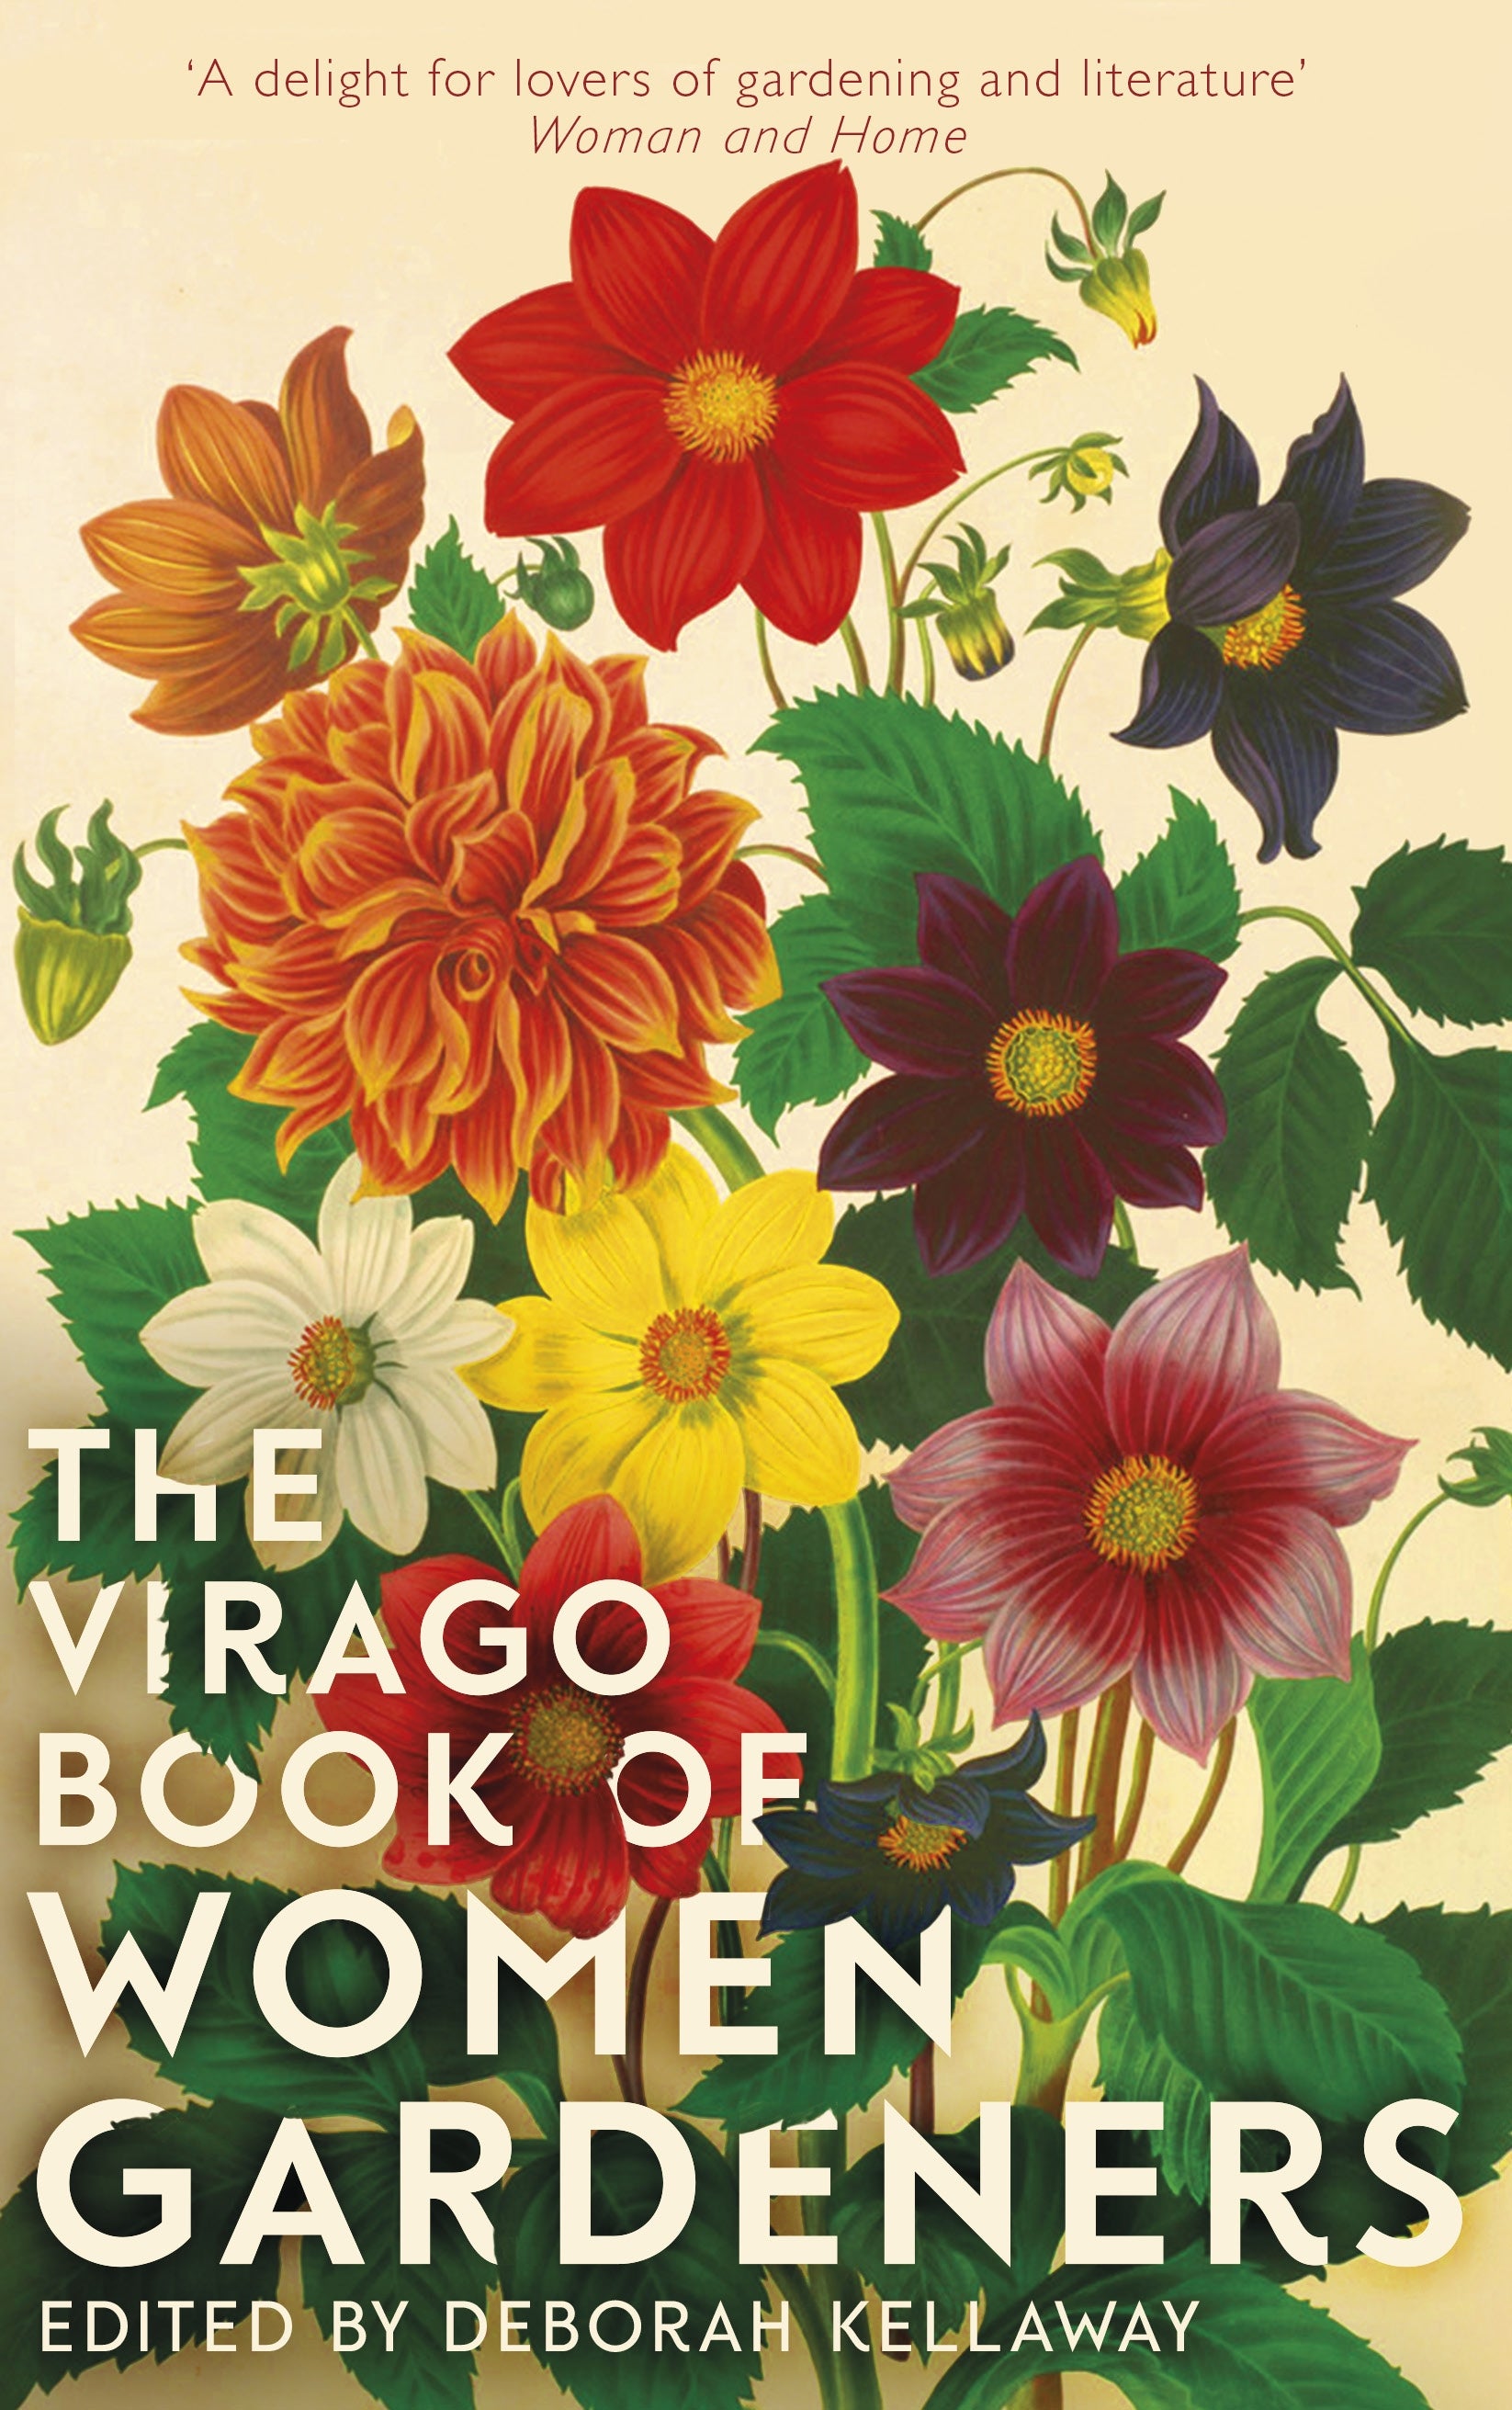 The Virago Book Of Women Gardeners by Deborah Kellaway